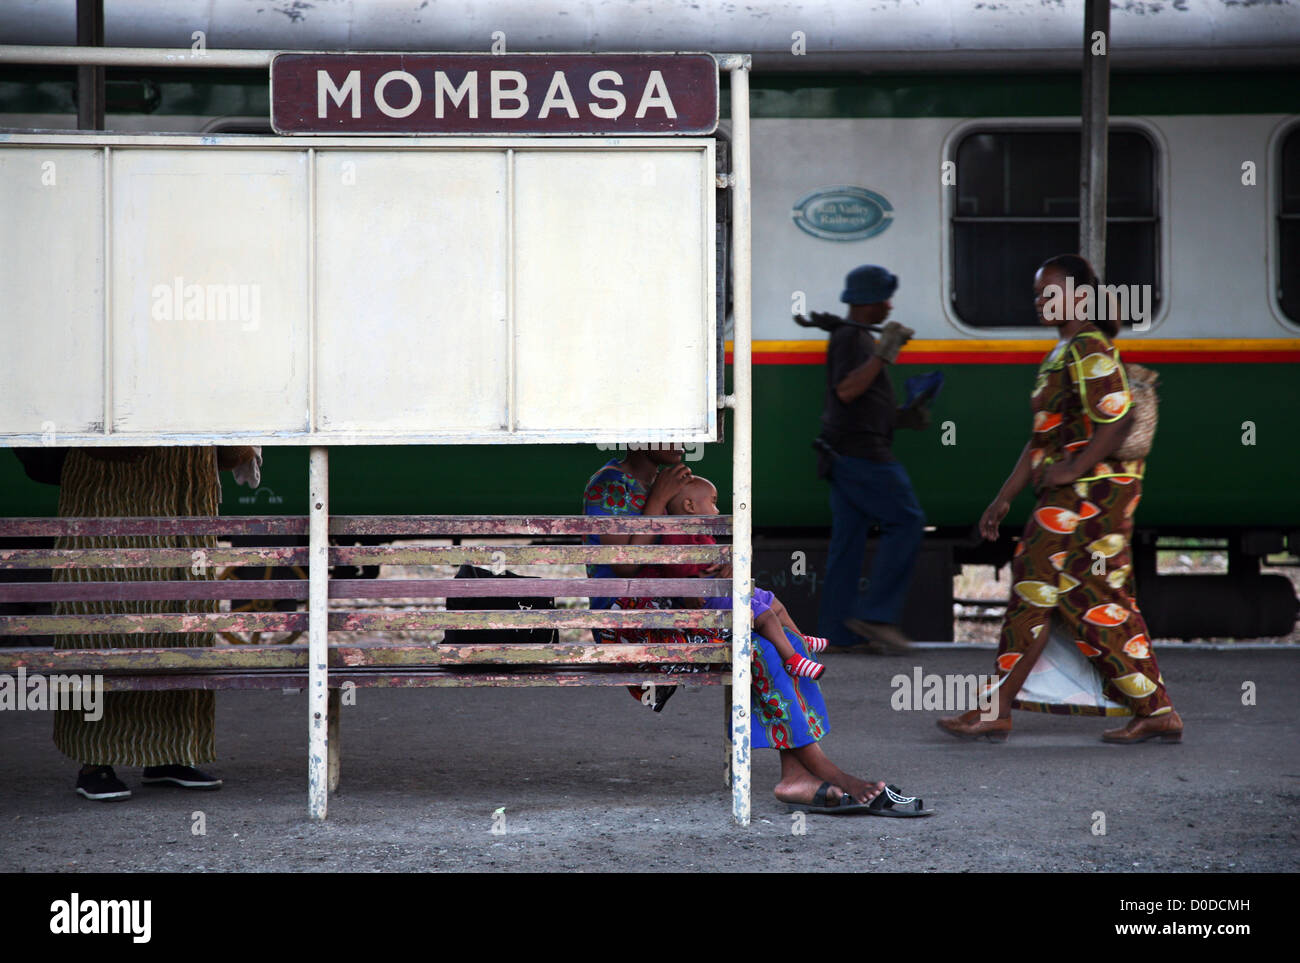 Mombasa Bahnhof, Mombasa, Kenia, Ostafrika. 12/2009. Foto: Stuart Boulton/Alamy Stockfoto